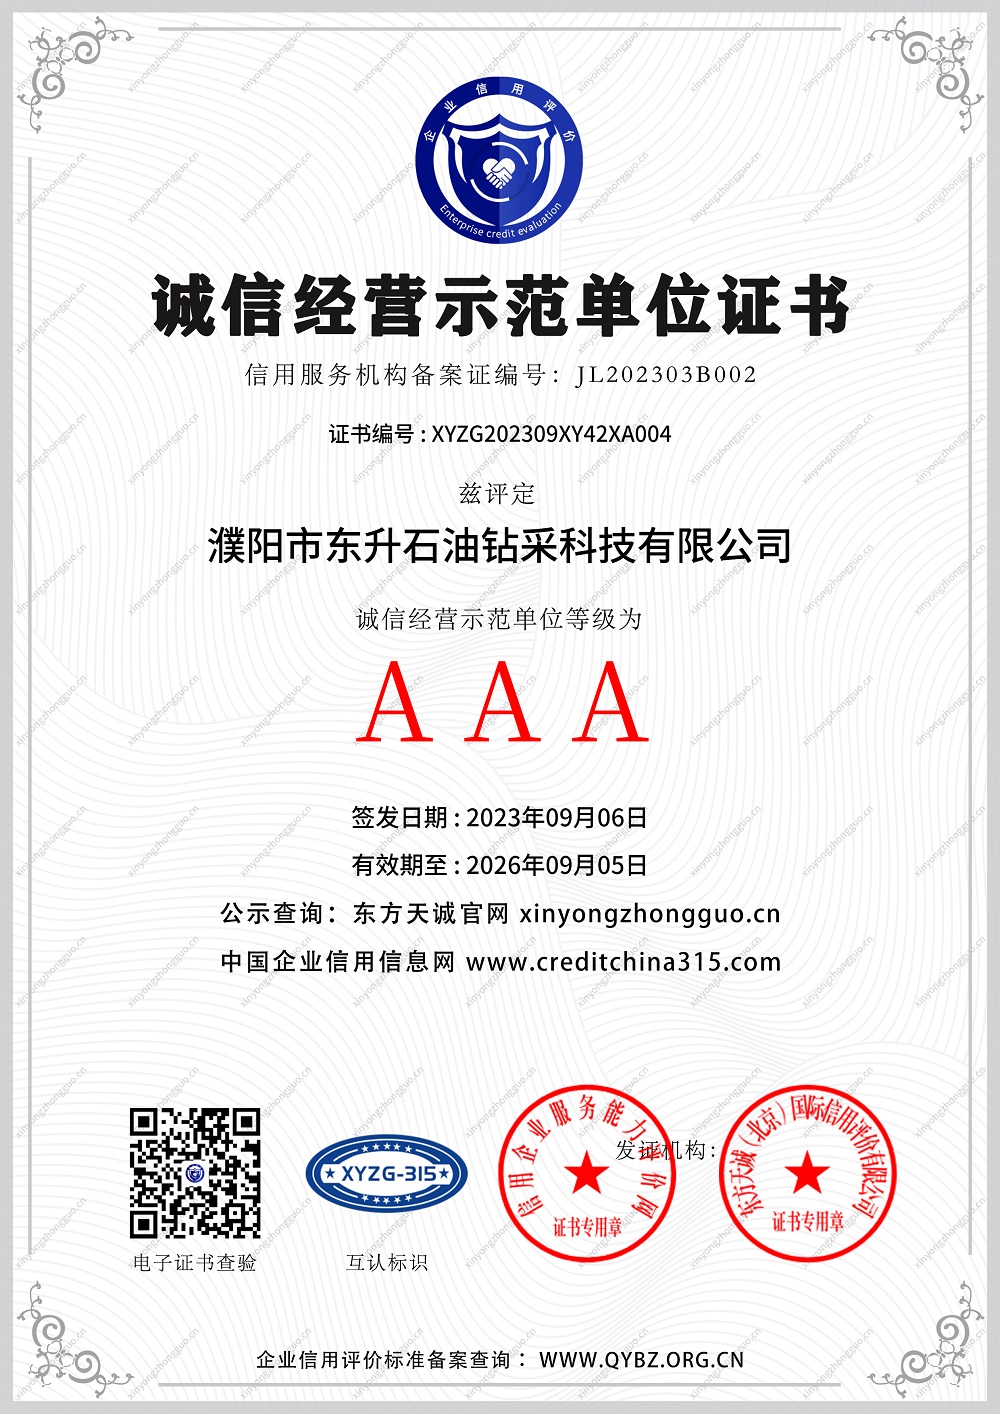 AAA诚信经营示范单位证书